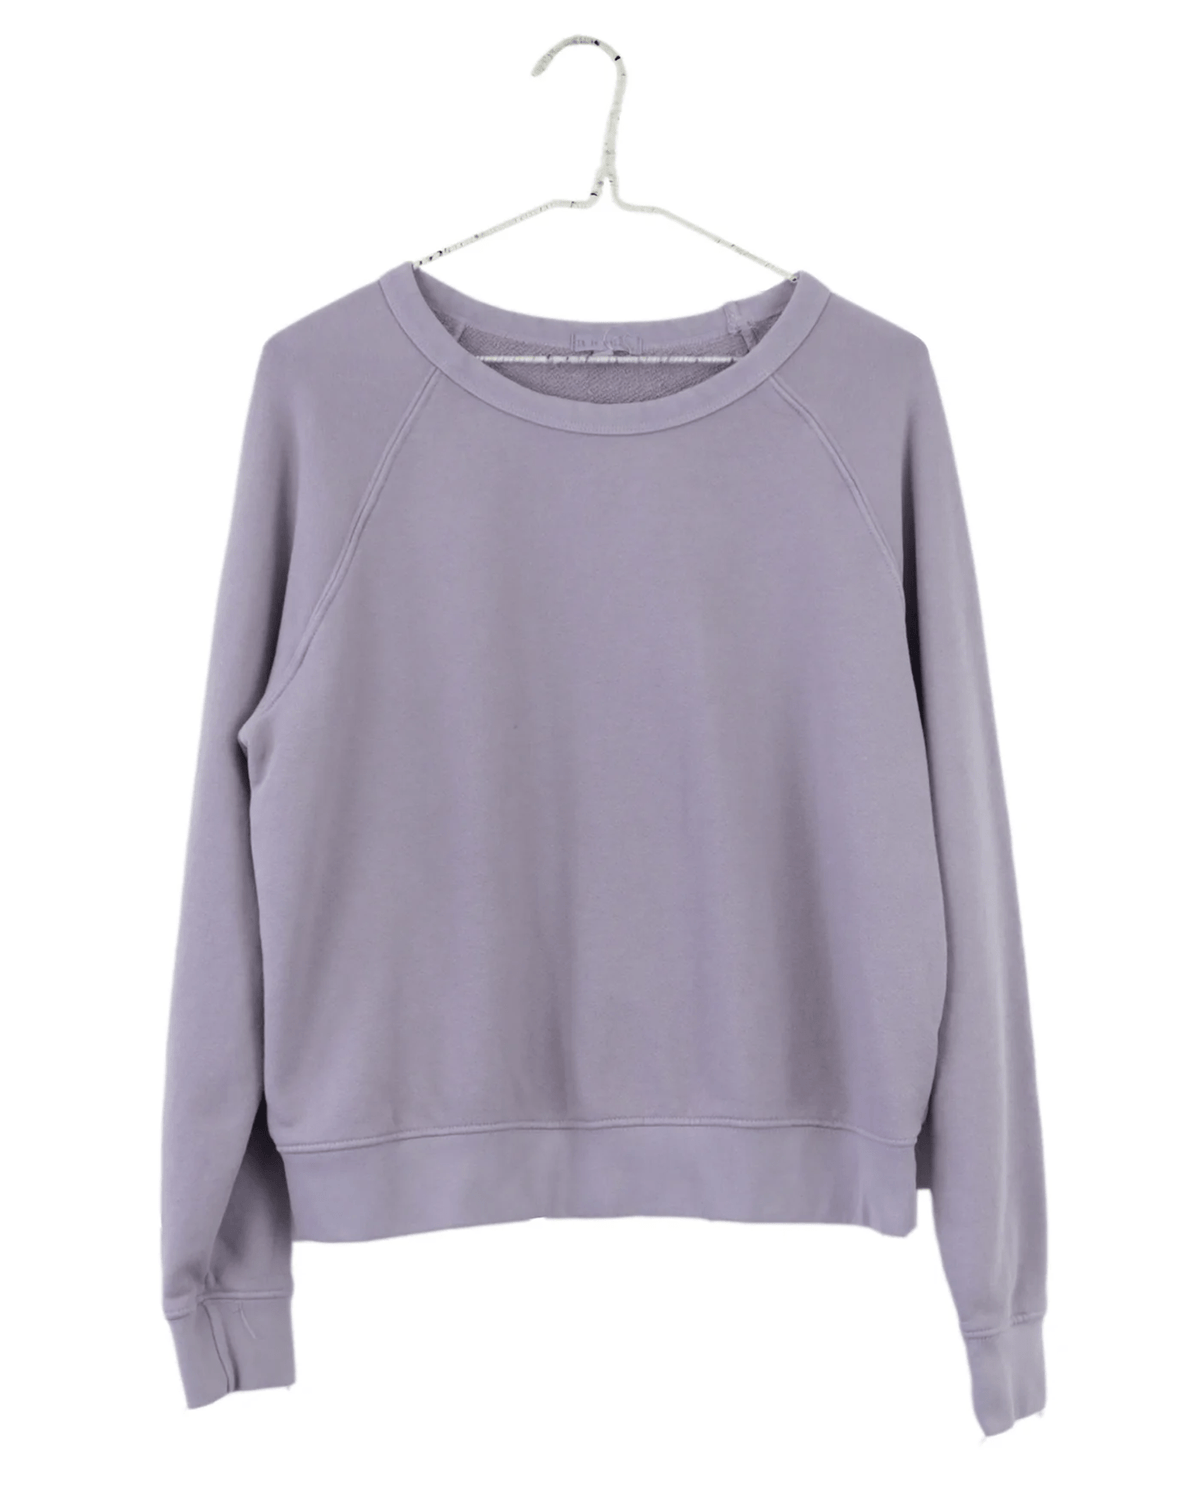 It is well LA Clothing Everyday Sweatshirt in Lavender